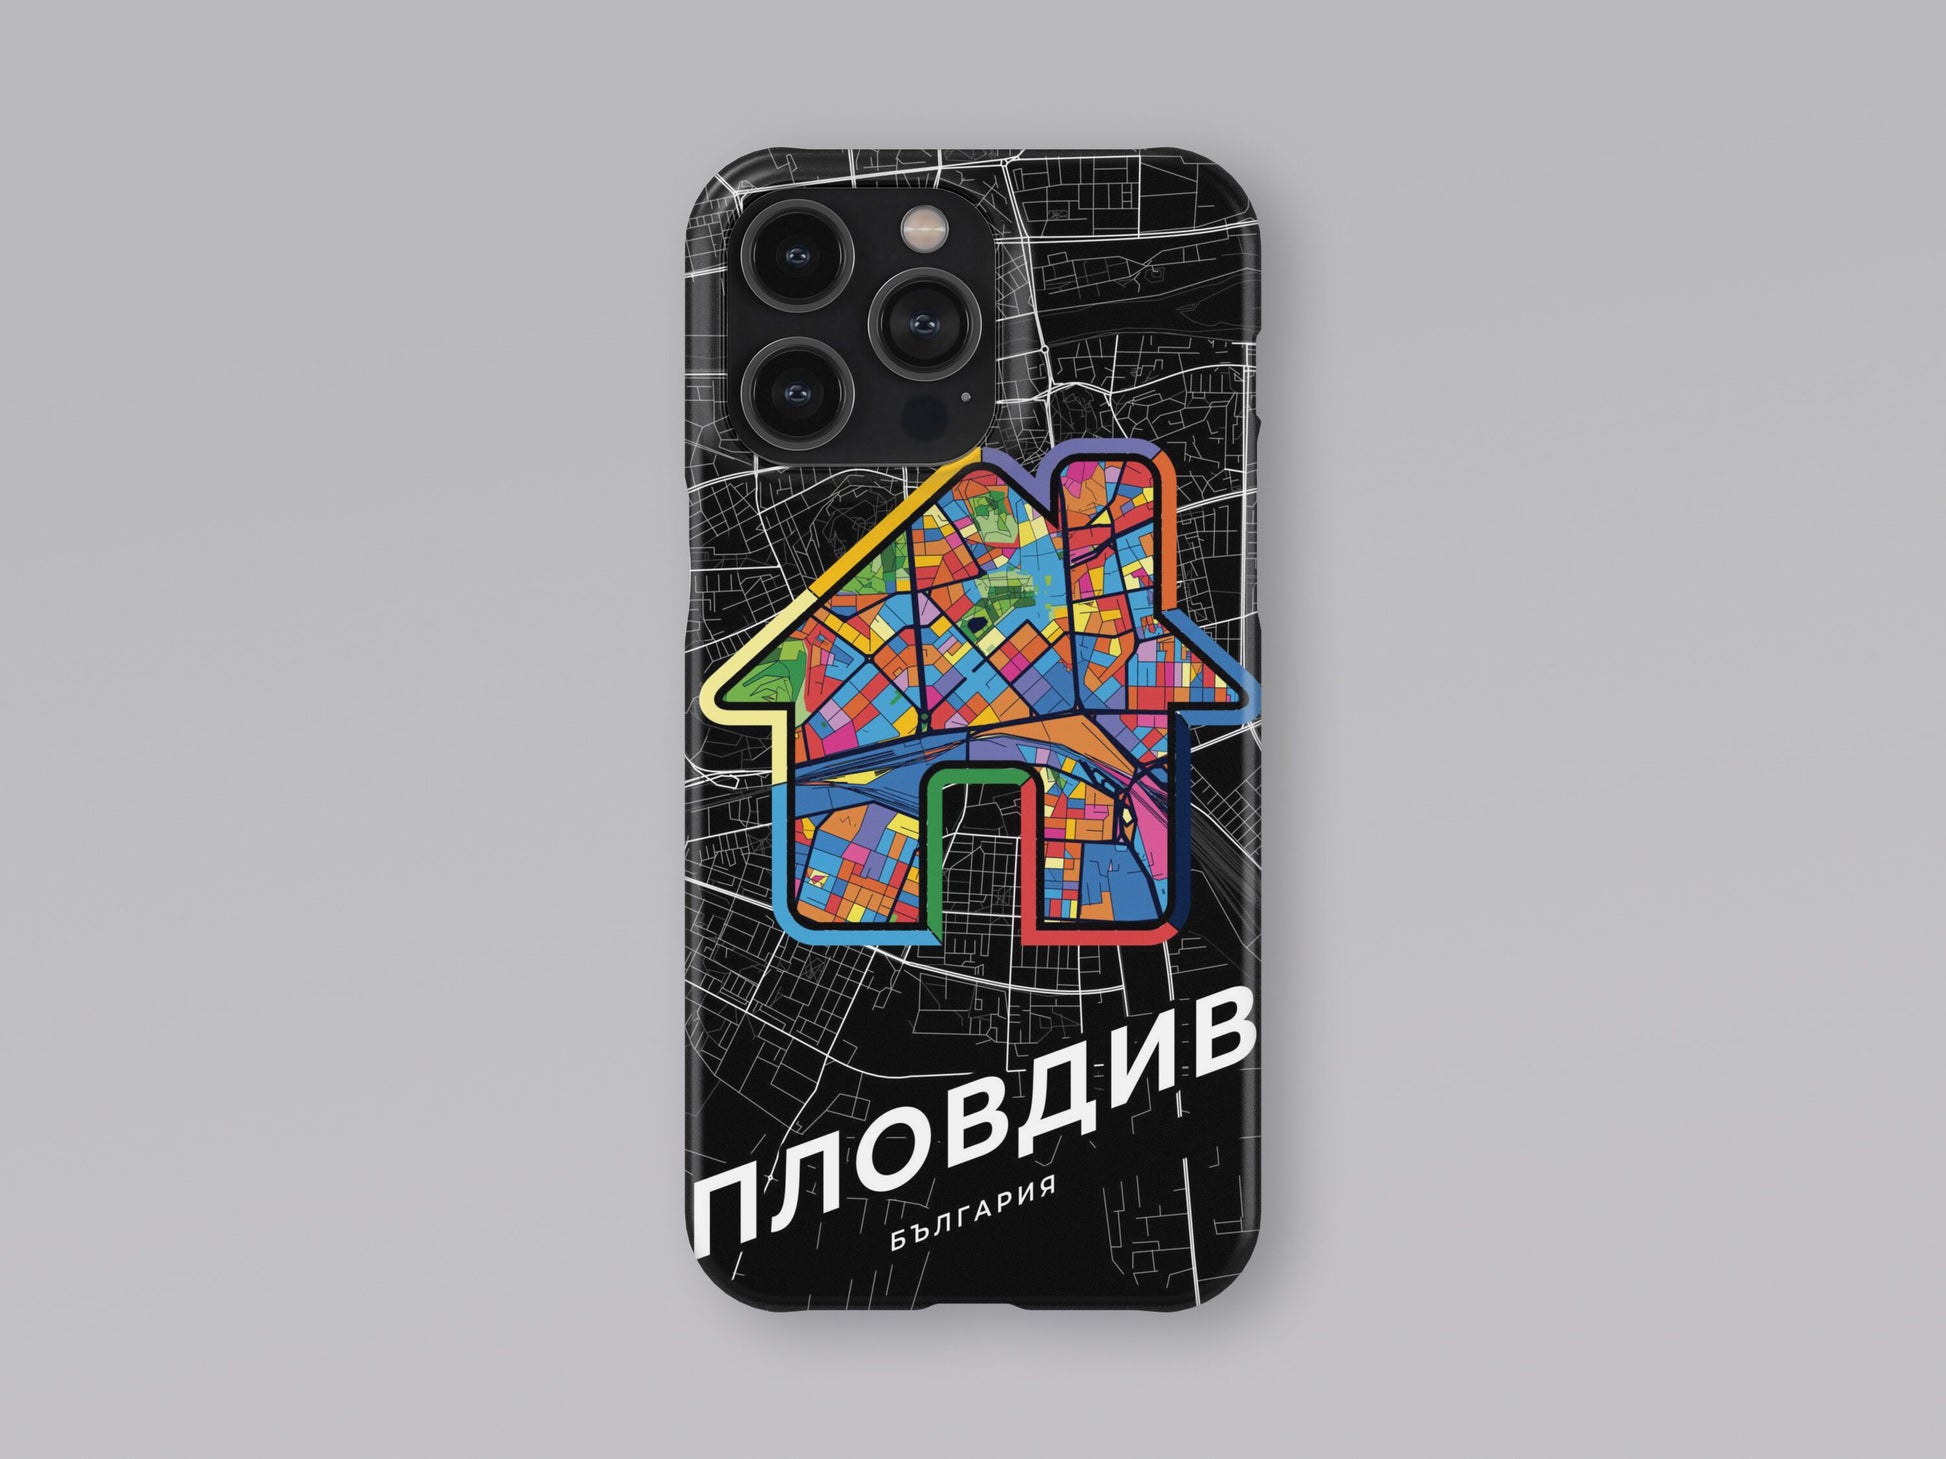 Пловдив България slim phone case with colorful icon. Birthday, wedding or housewarming gift. Couple match cases. 3